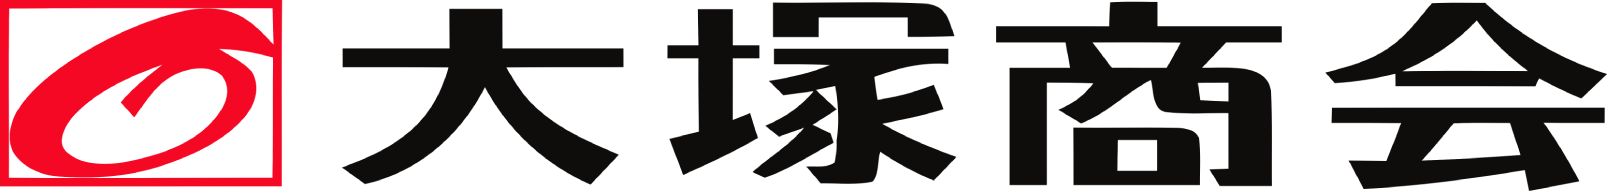 Otsuka logo large (transparent PNG)